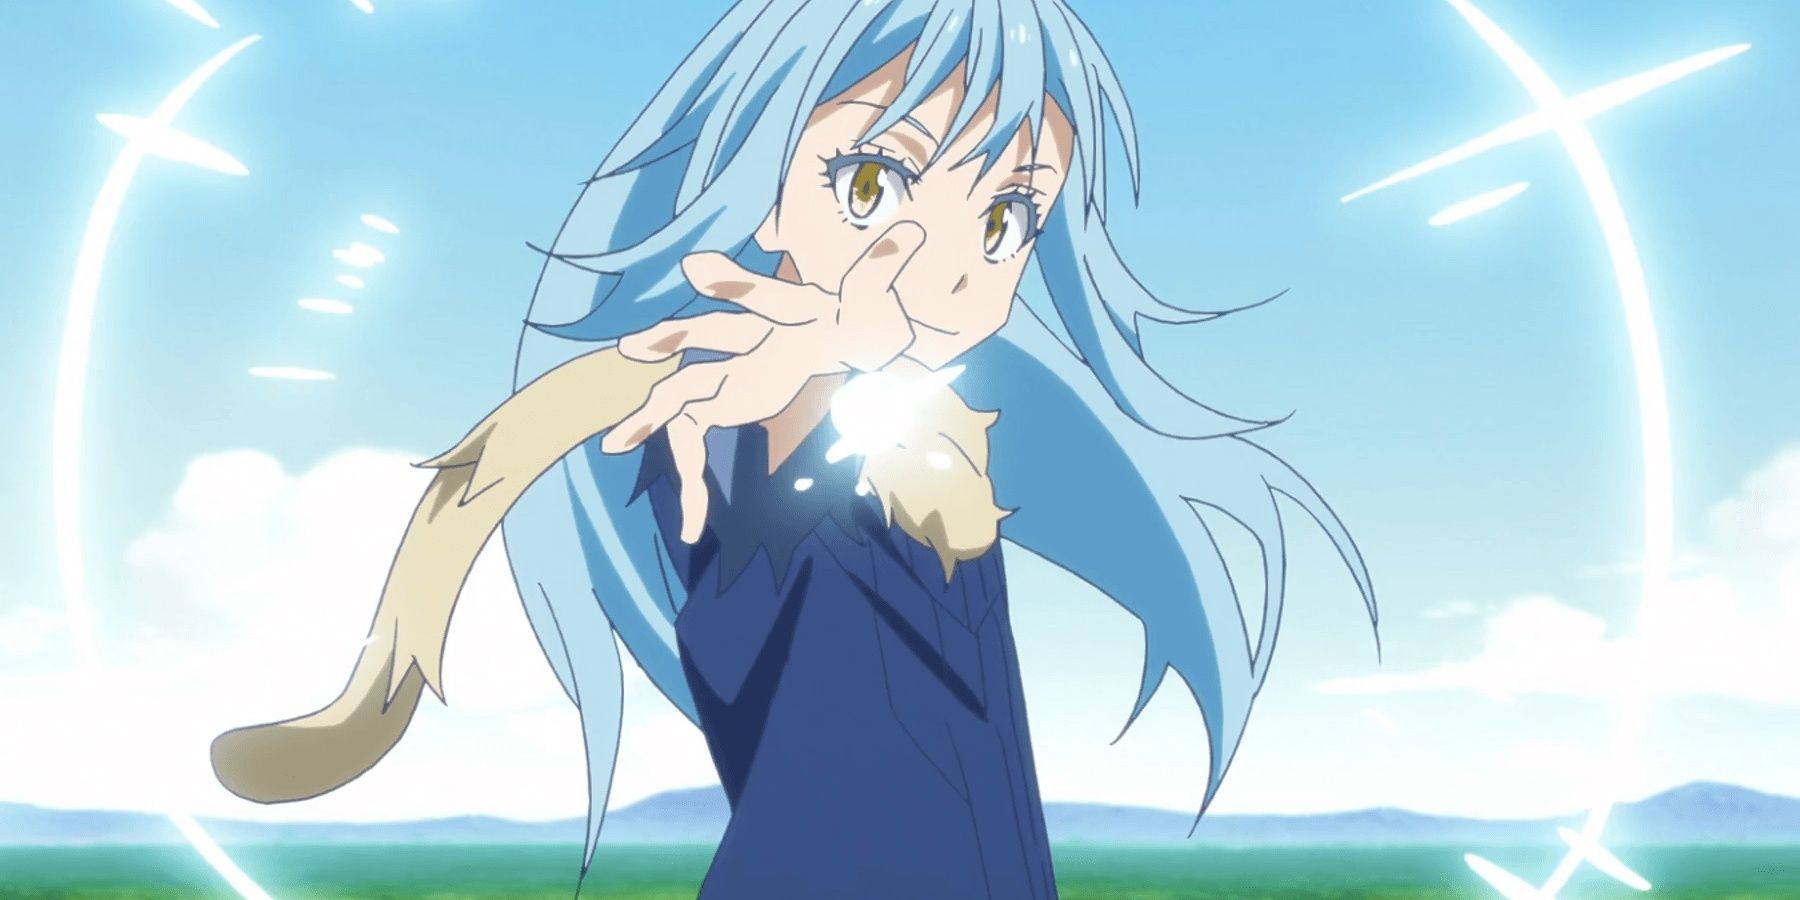 That Time I Got Reincarnated as a Slime Gets Anime Film!, Anime News